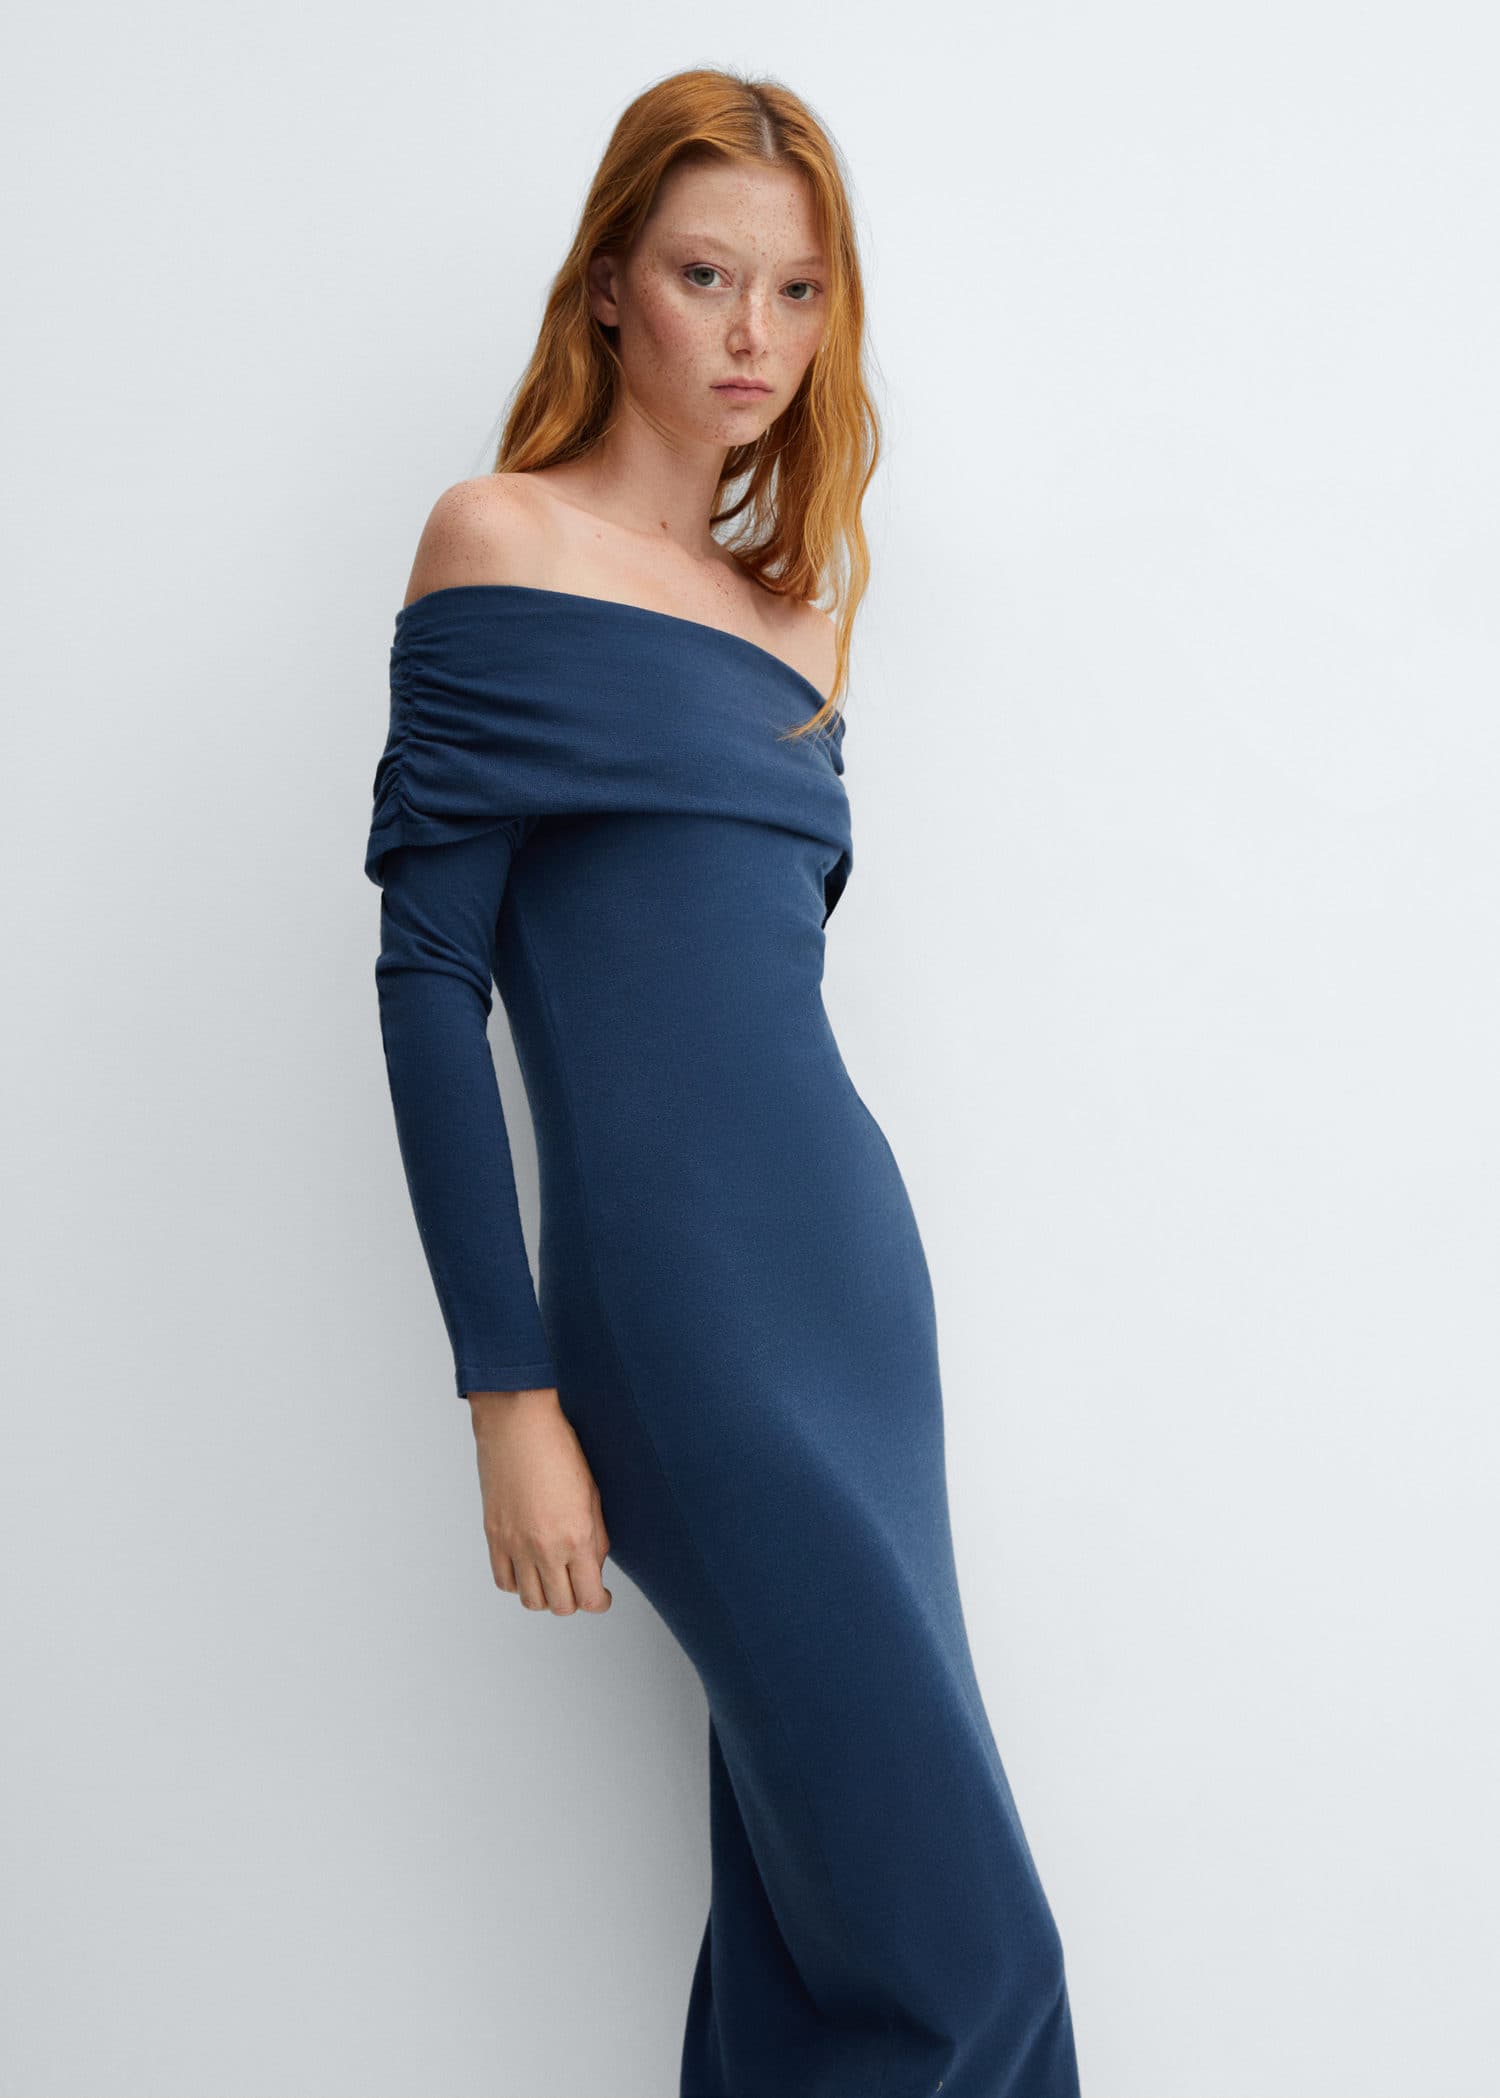 Amazon.com : Mango Pattern Women's Summer Casual Short Sleeve Maxi Dress  Crew Neck Printed Long Dresses 2XS : Sports & Outdoors